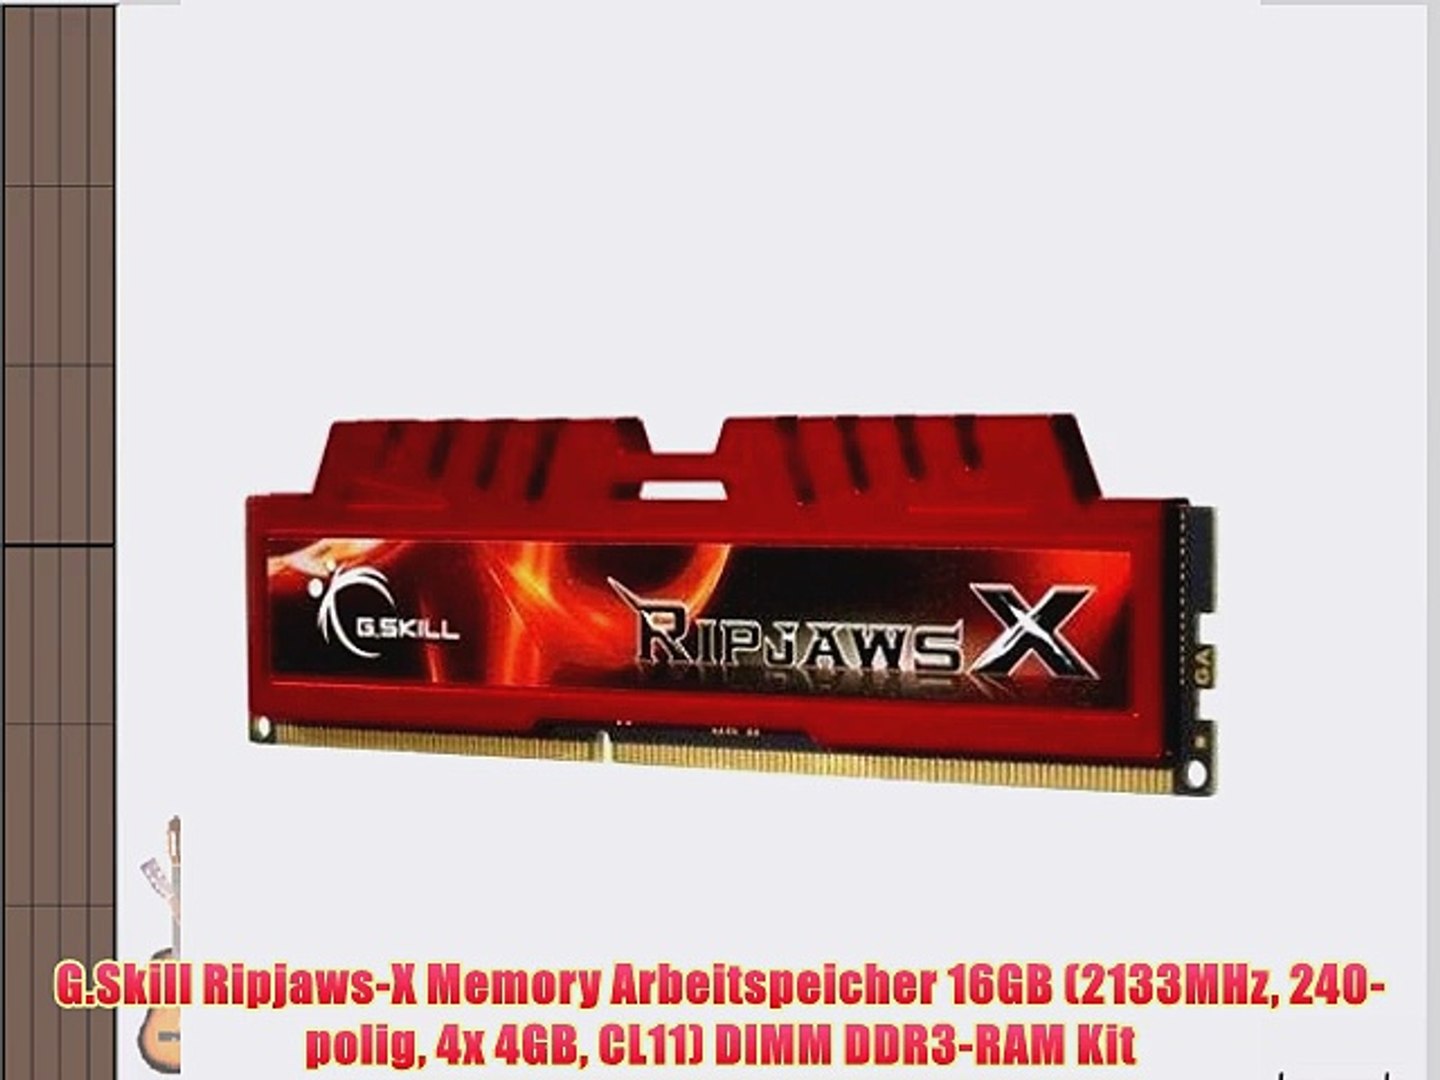 G.Skill Ripjaws-X Memory Arbeitspeicher 16GB (2133MHz 240-polig 4x 4GB  CL11) DIMM DDR3-RAM - video Dailymotion